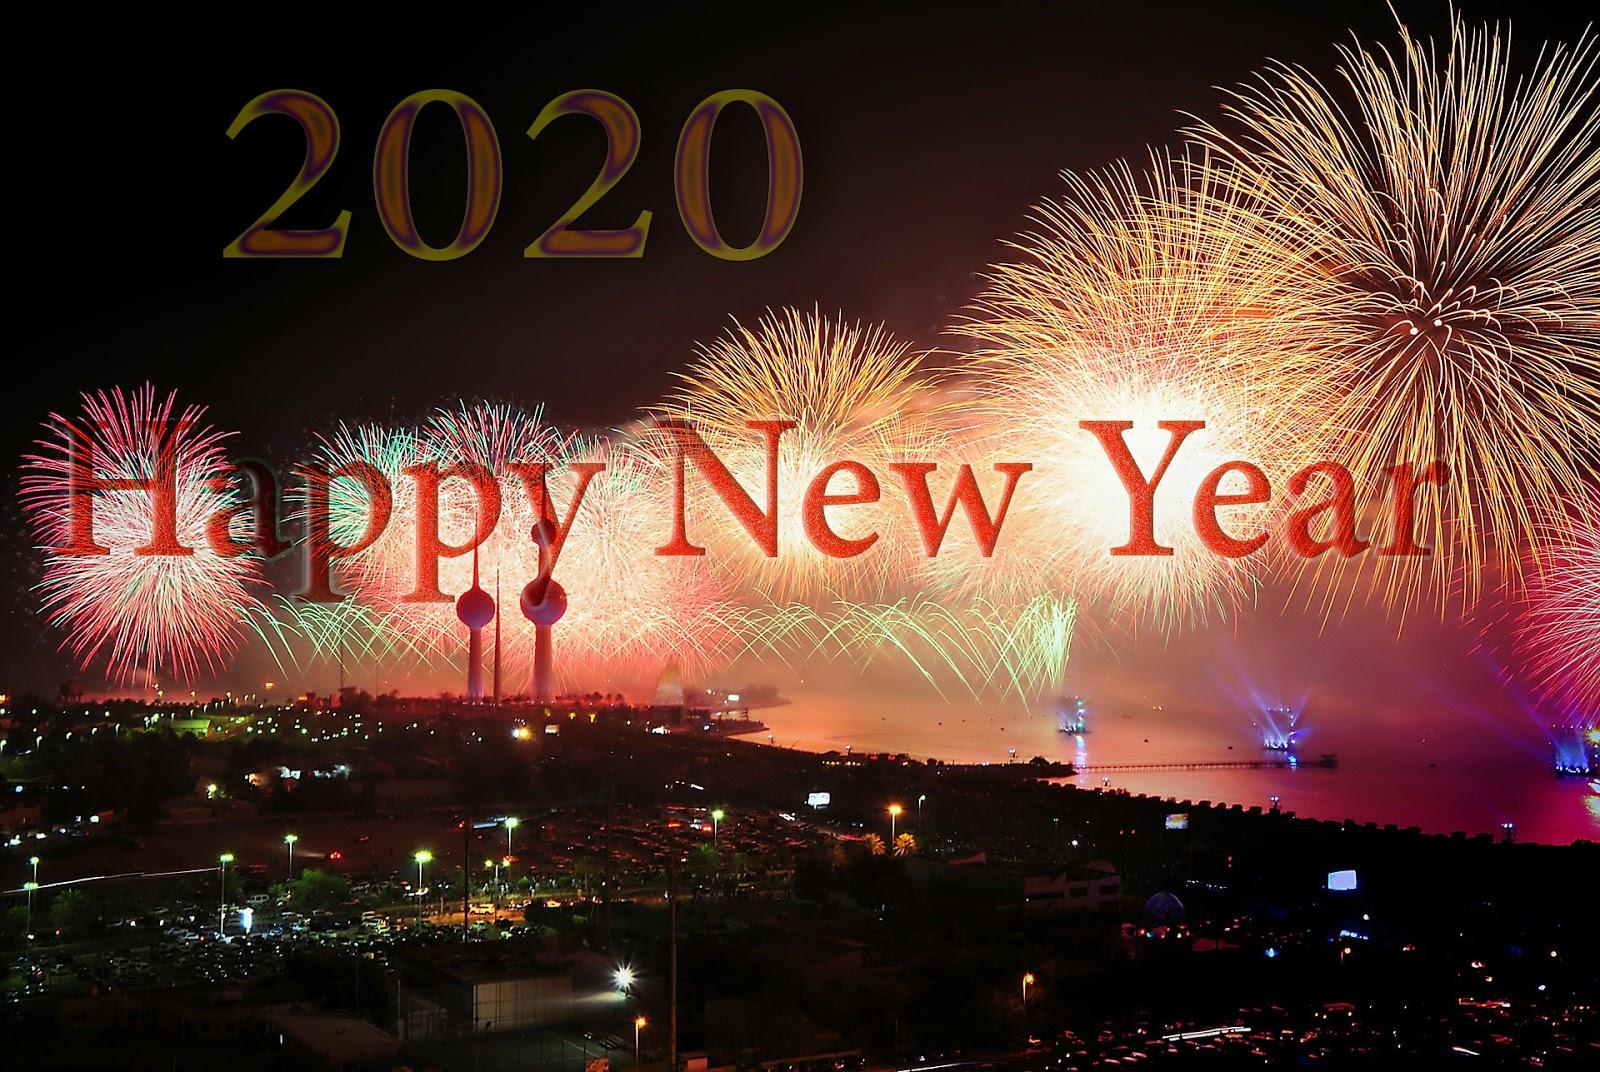 Happy New Year 2020 Image New Year Image 2020